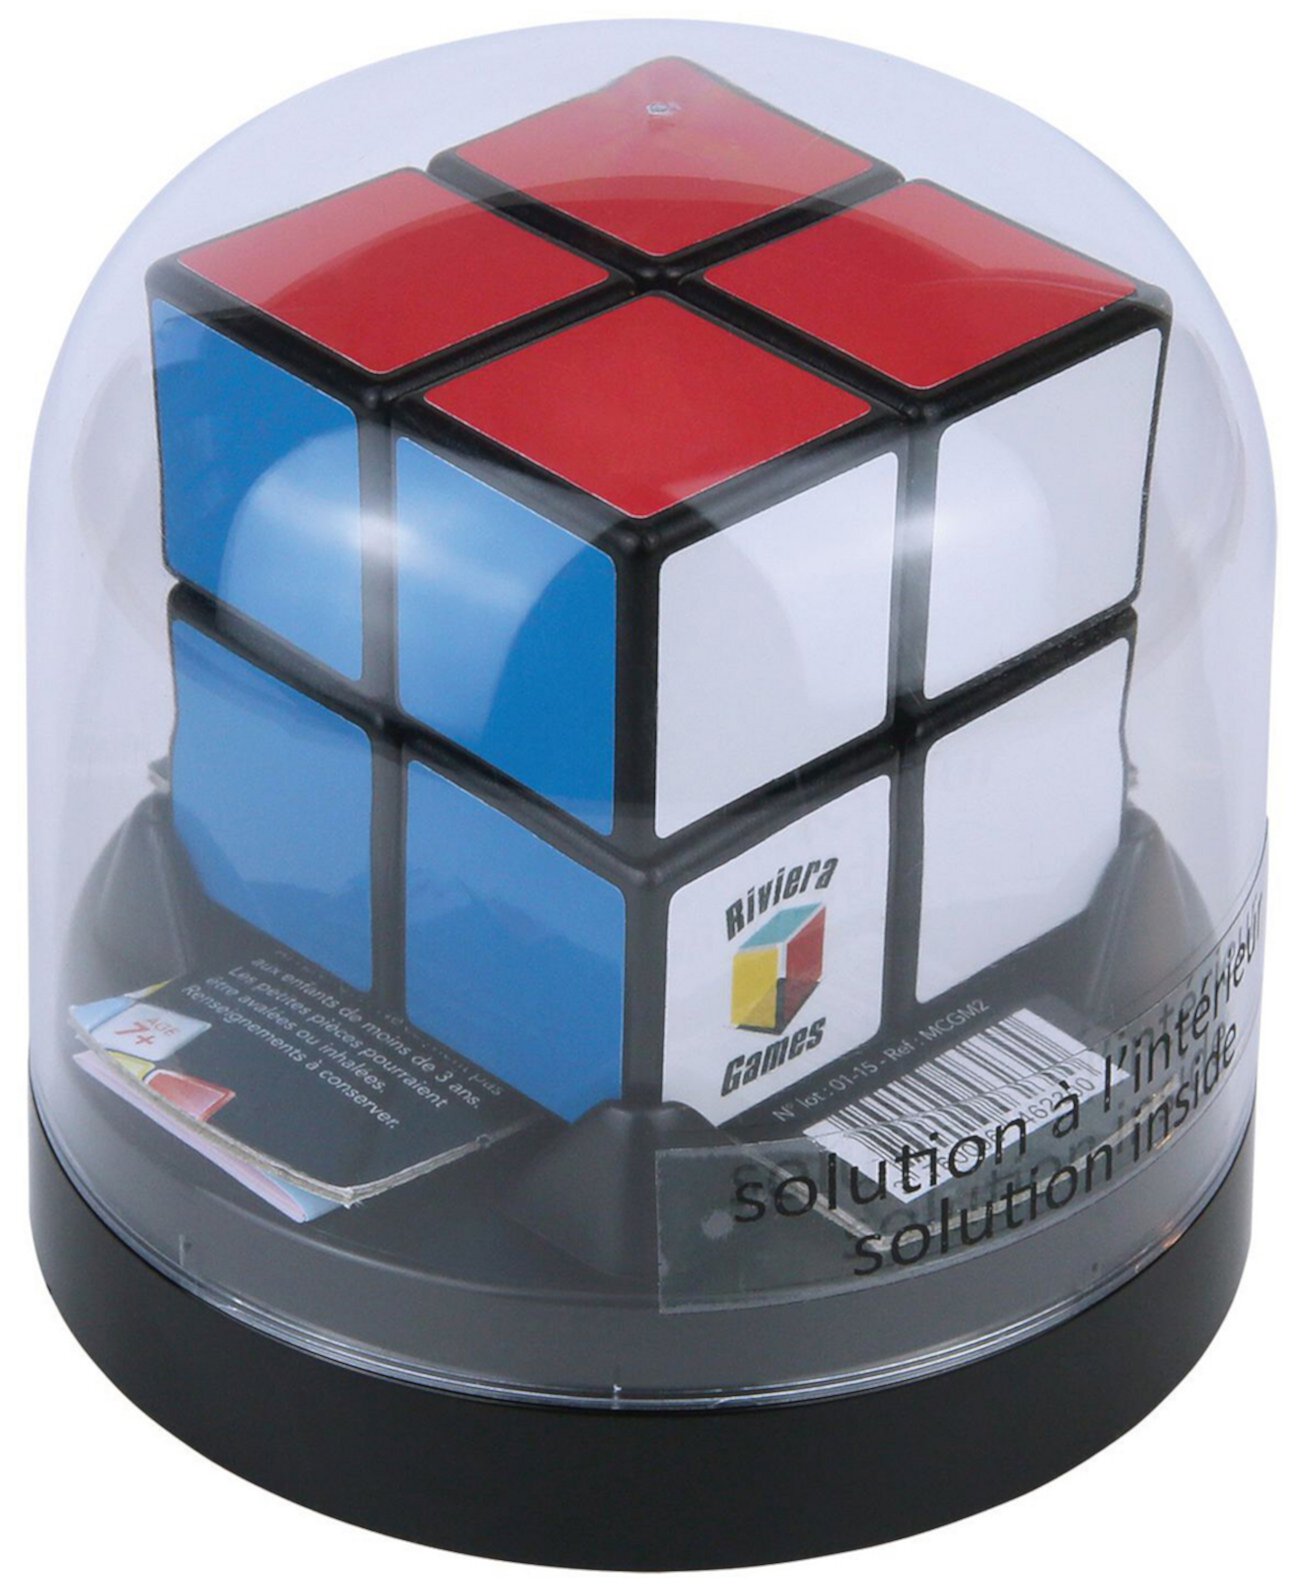 BIG Multicube - головоломка с одним кубом Family Games Inc.